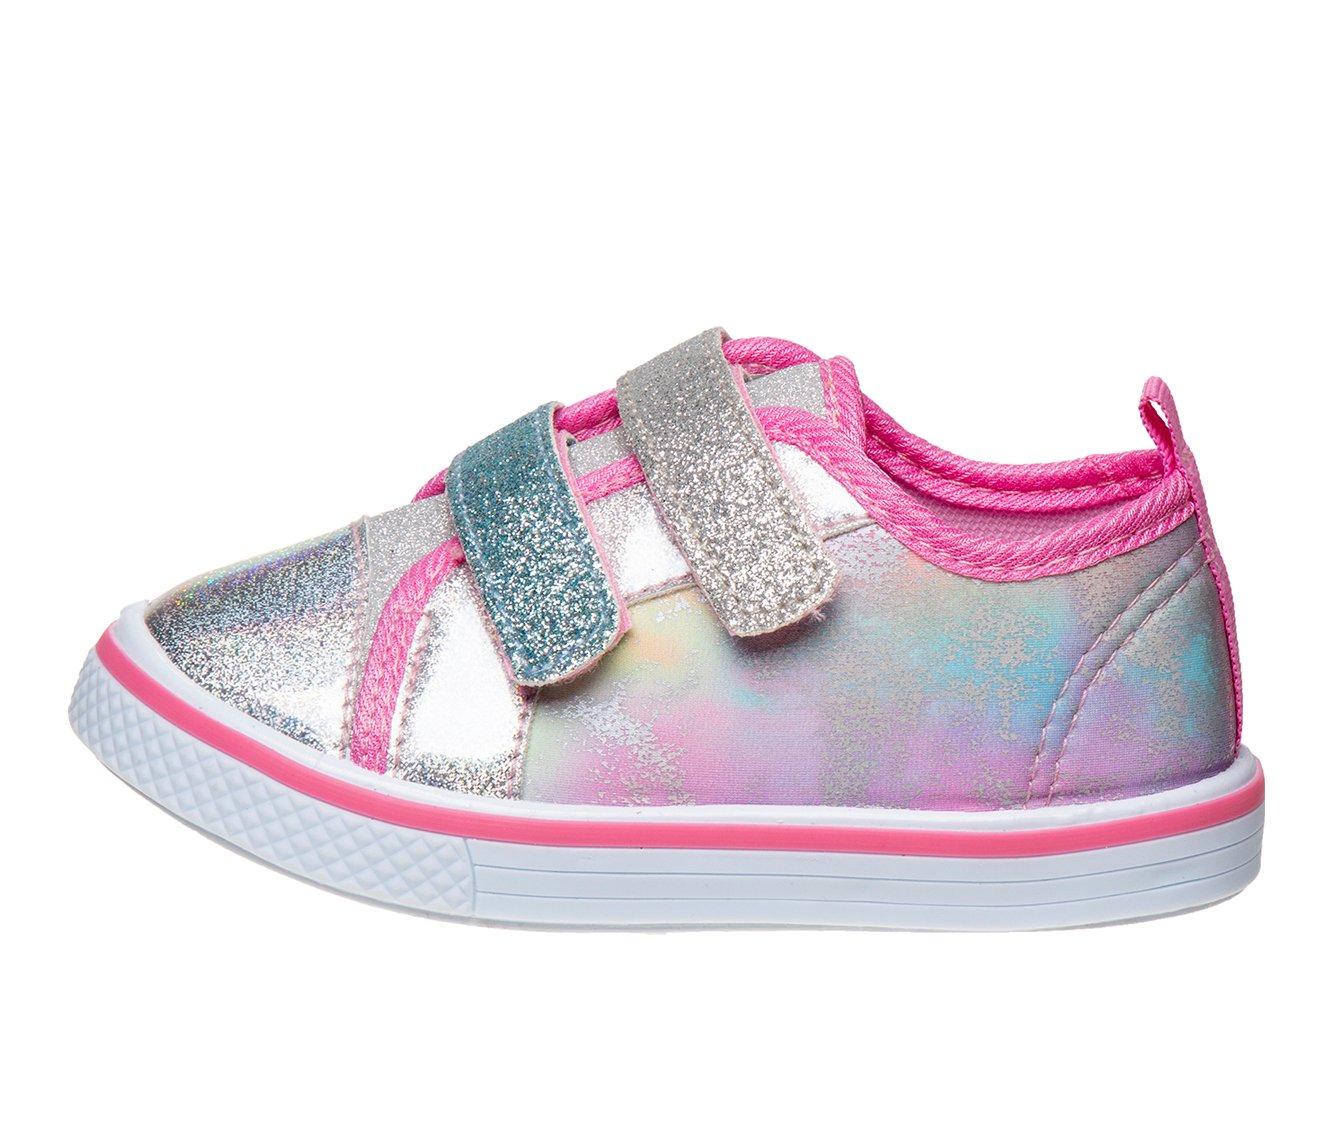 Girls' Laura Ashley Toddler Ellie Sneakers